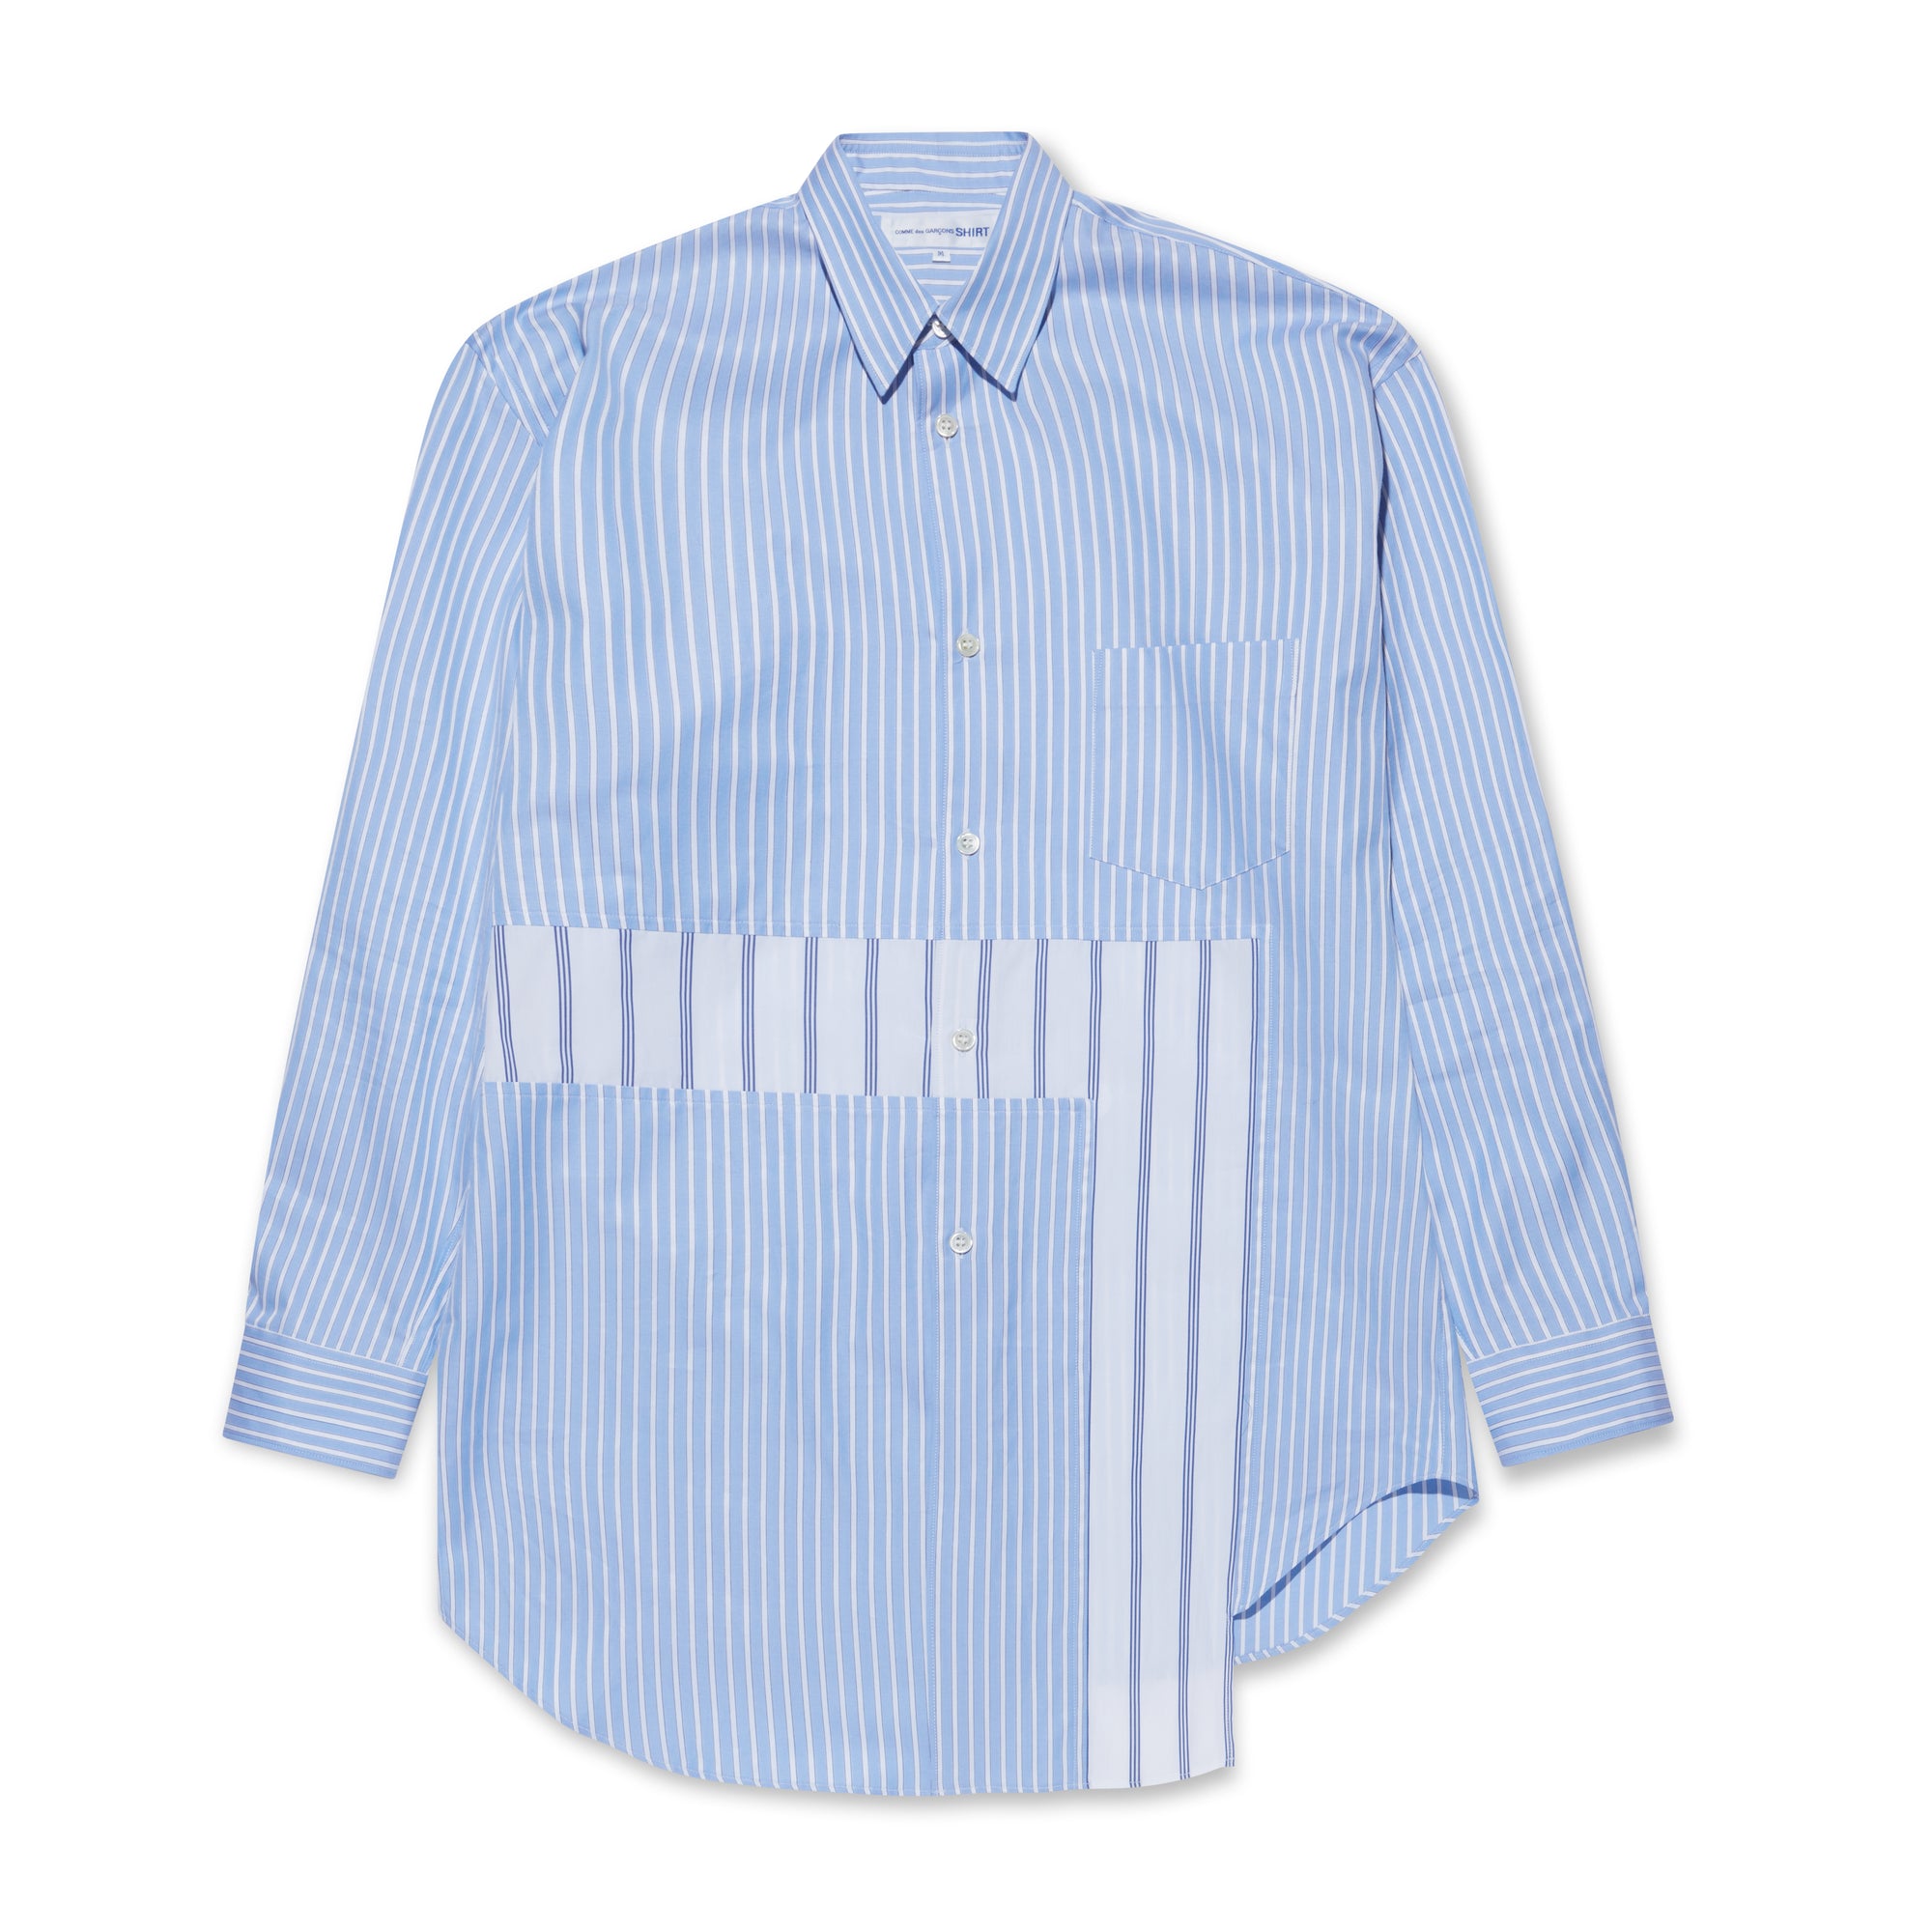 CDG Shirt - Men’s Panelled Shirt - (Stripe) view 5